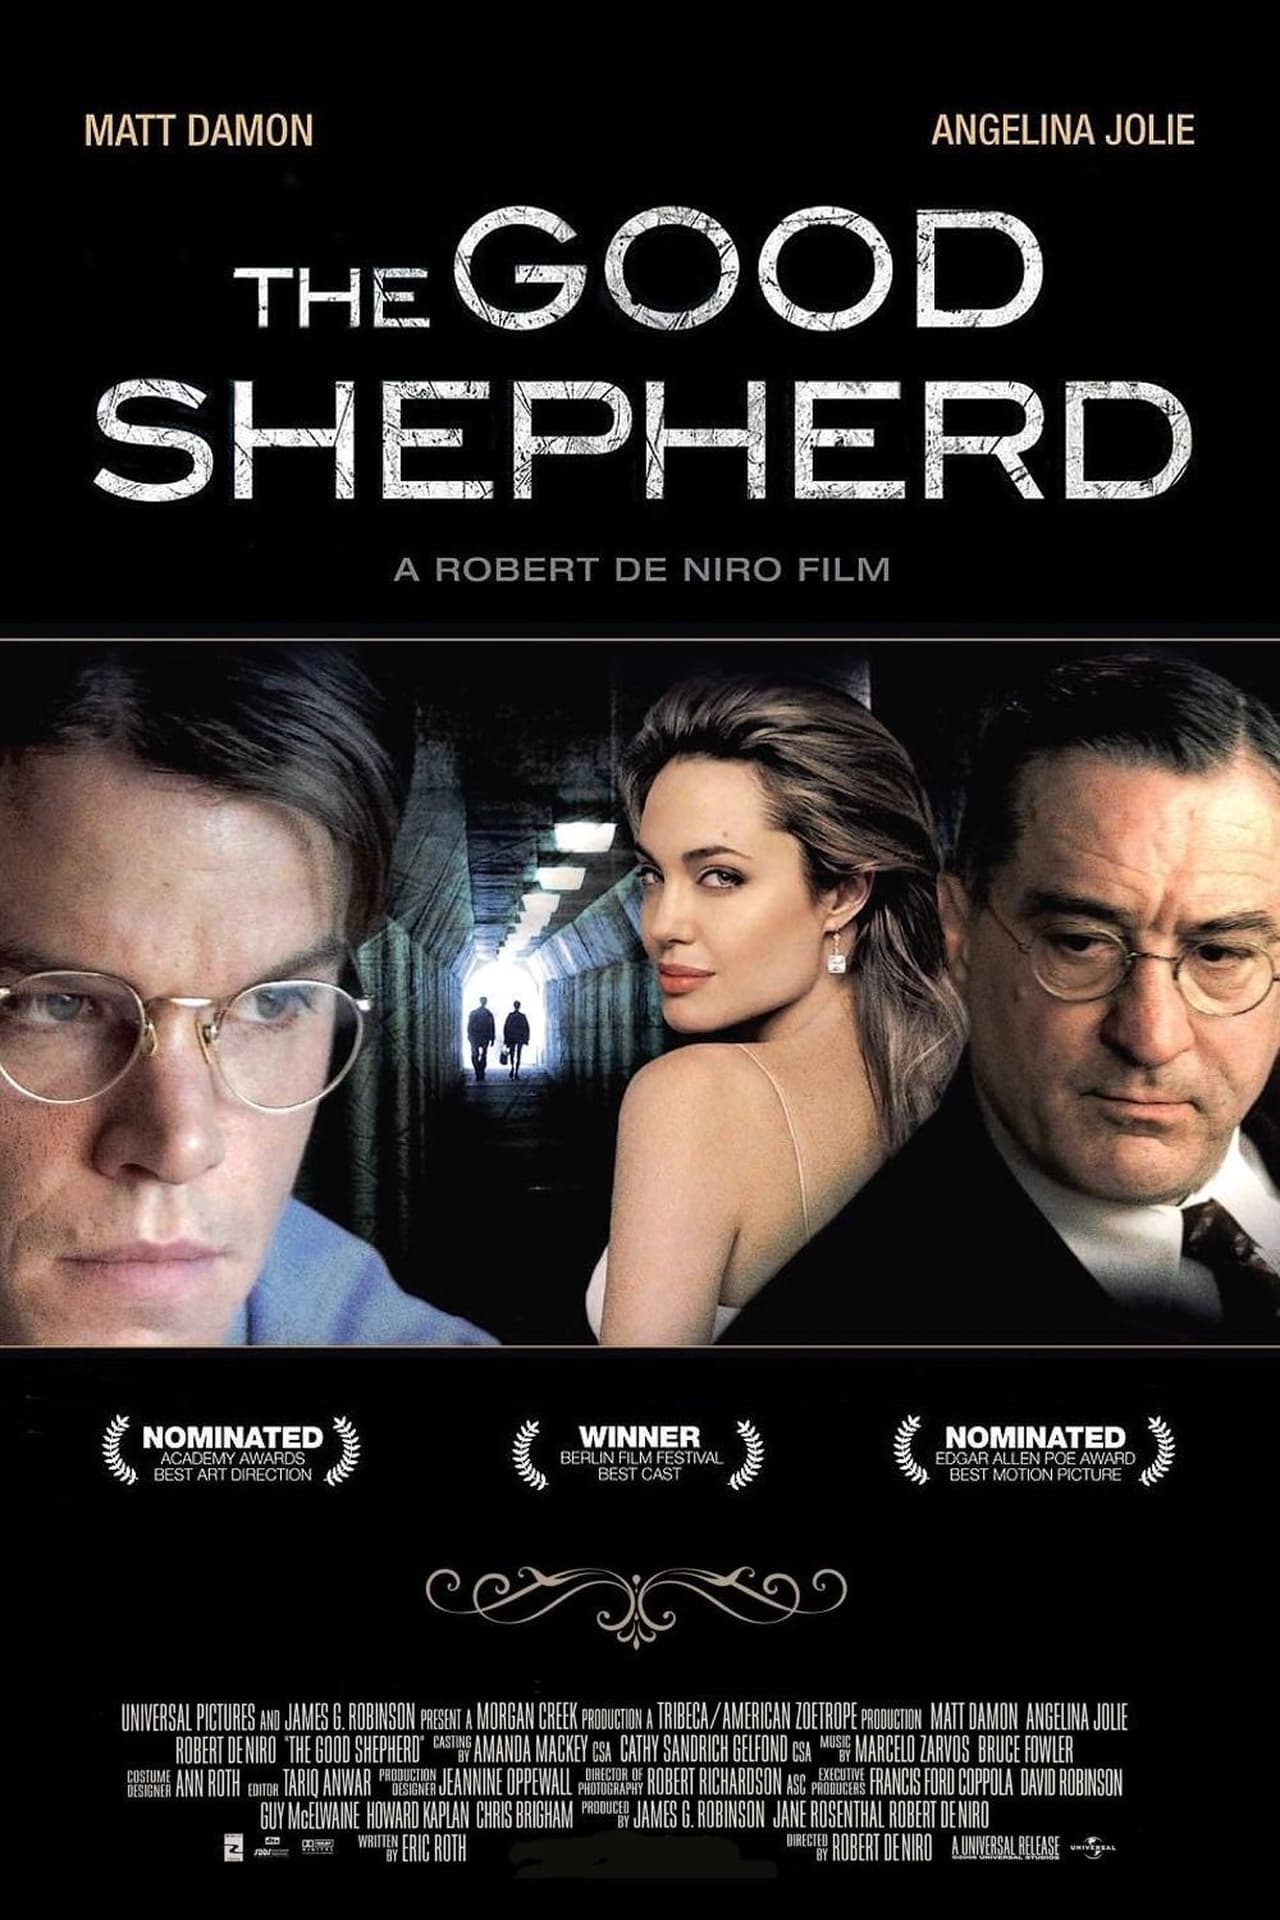 EN - The Good Shepherd (2006) DE NIRO, JOE PESCI